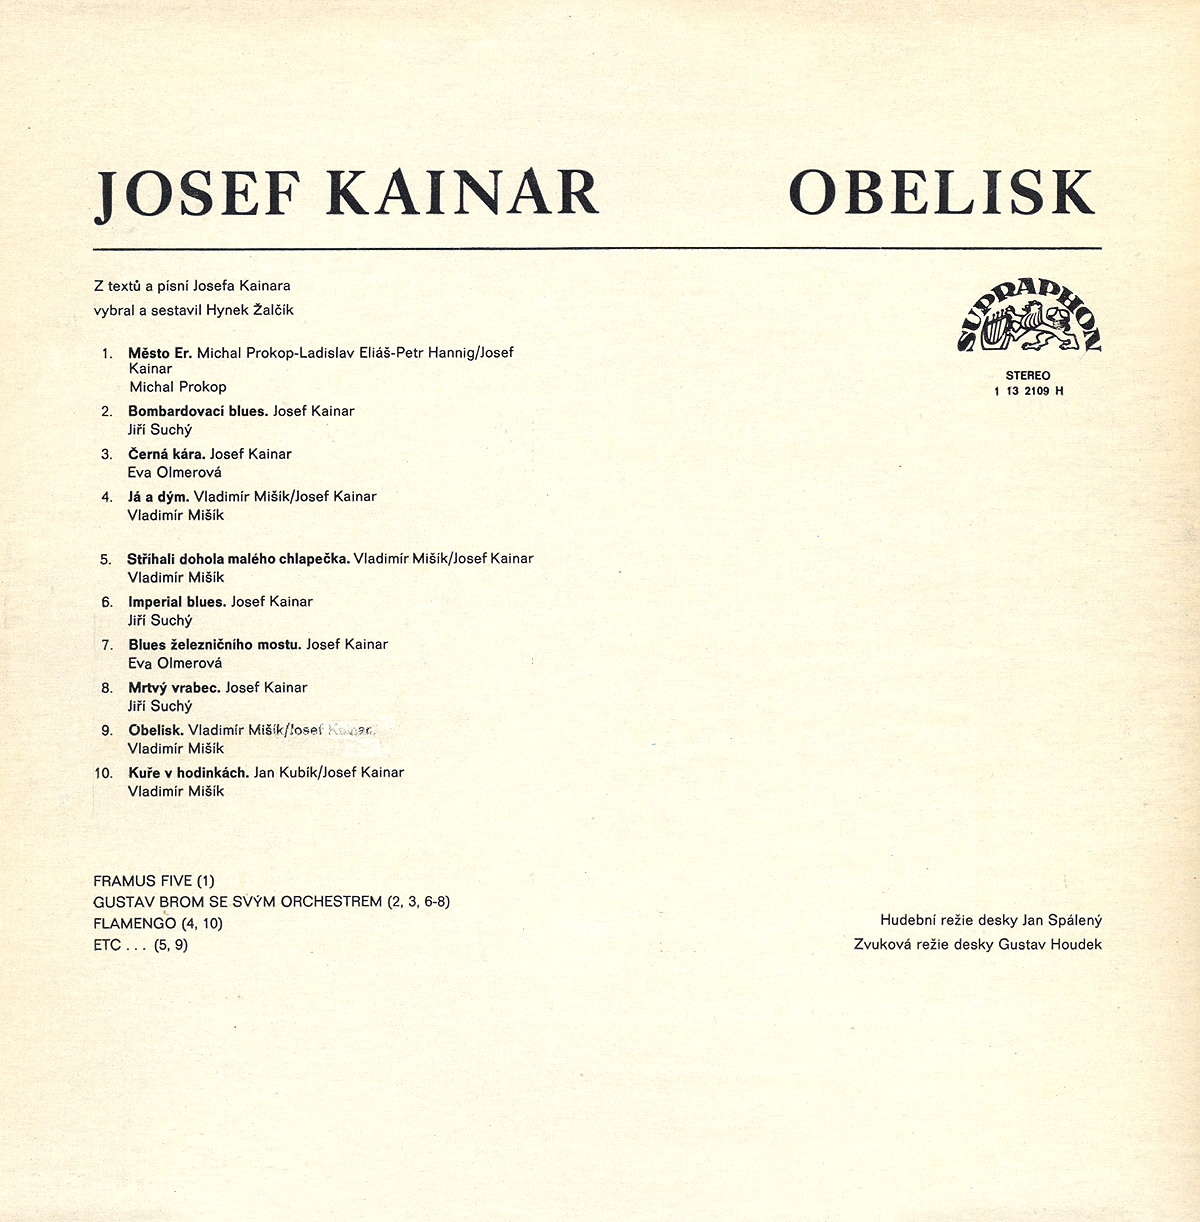 JOSEF KAINAR / OBELISK